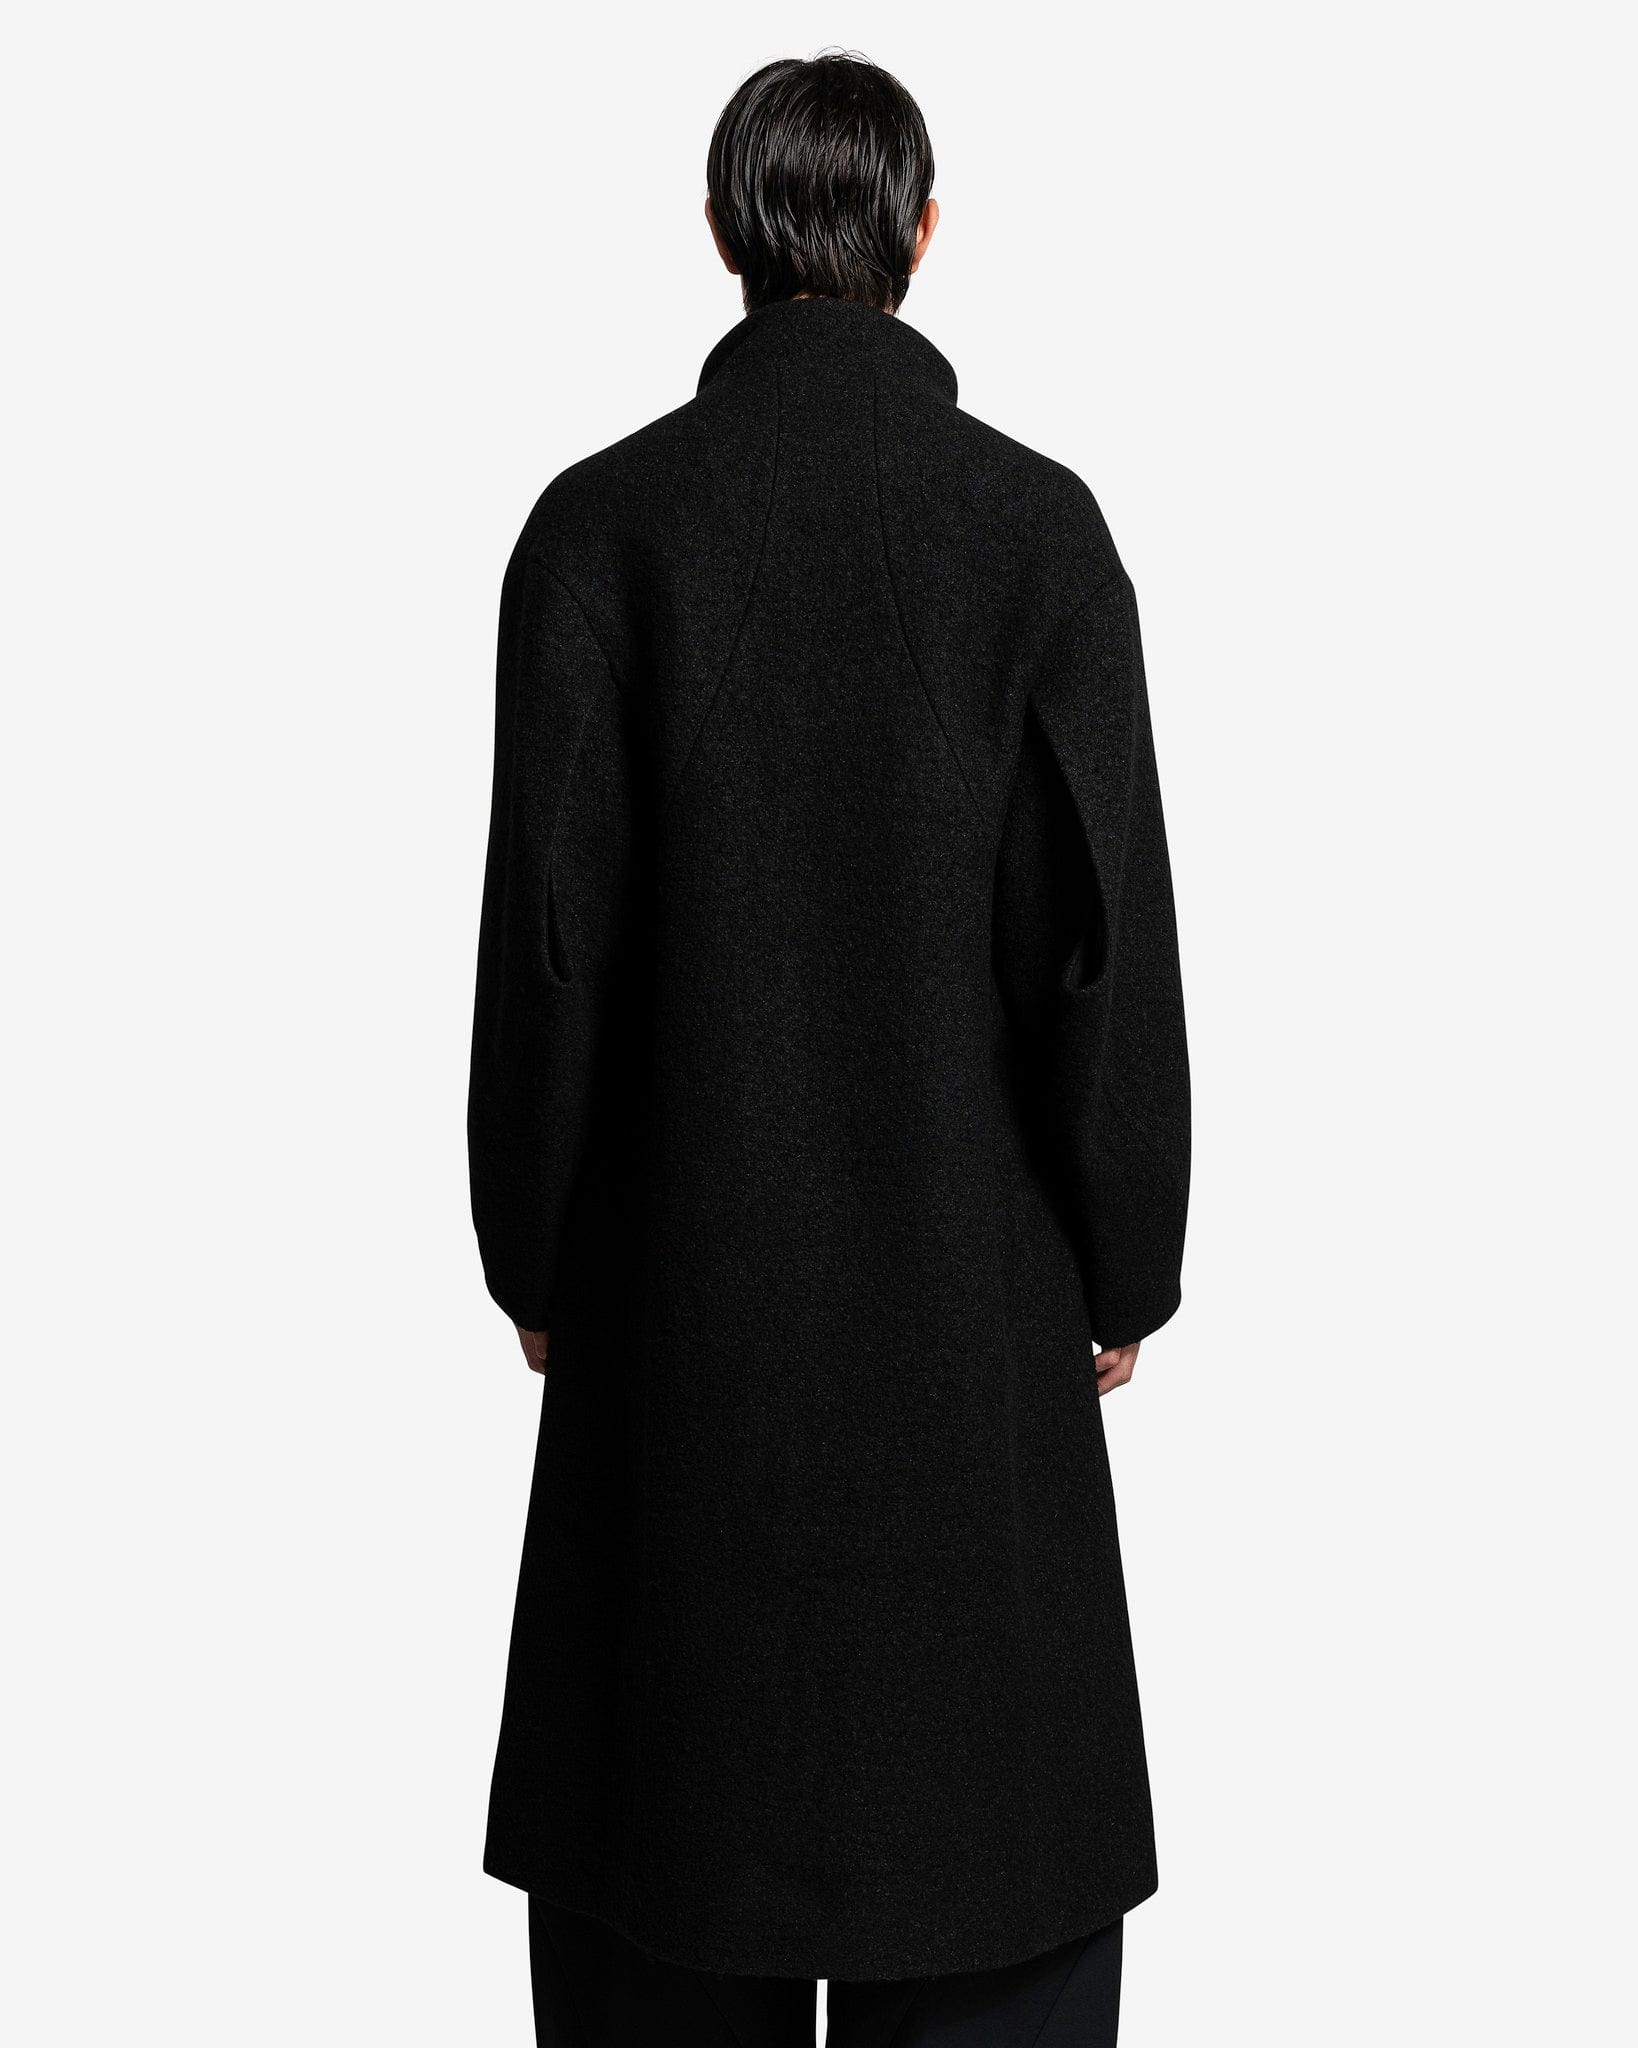 Alfalfa Coat in Black